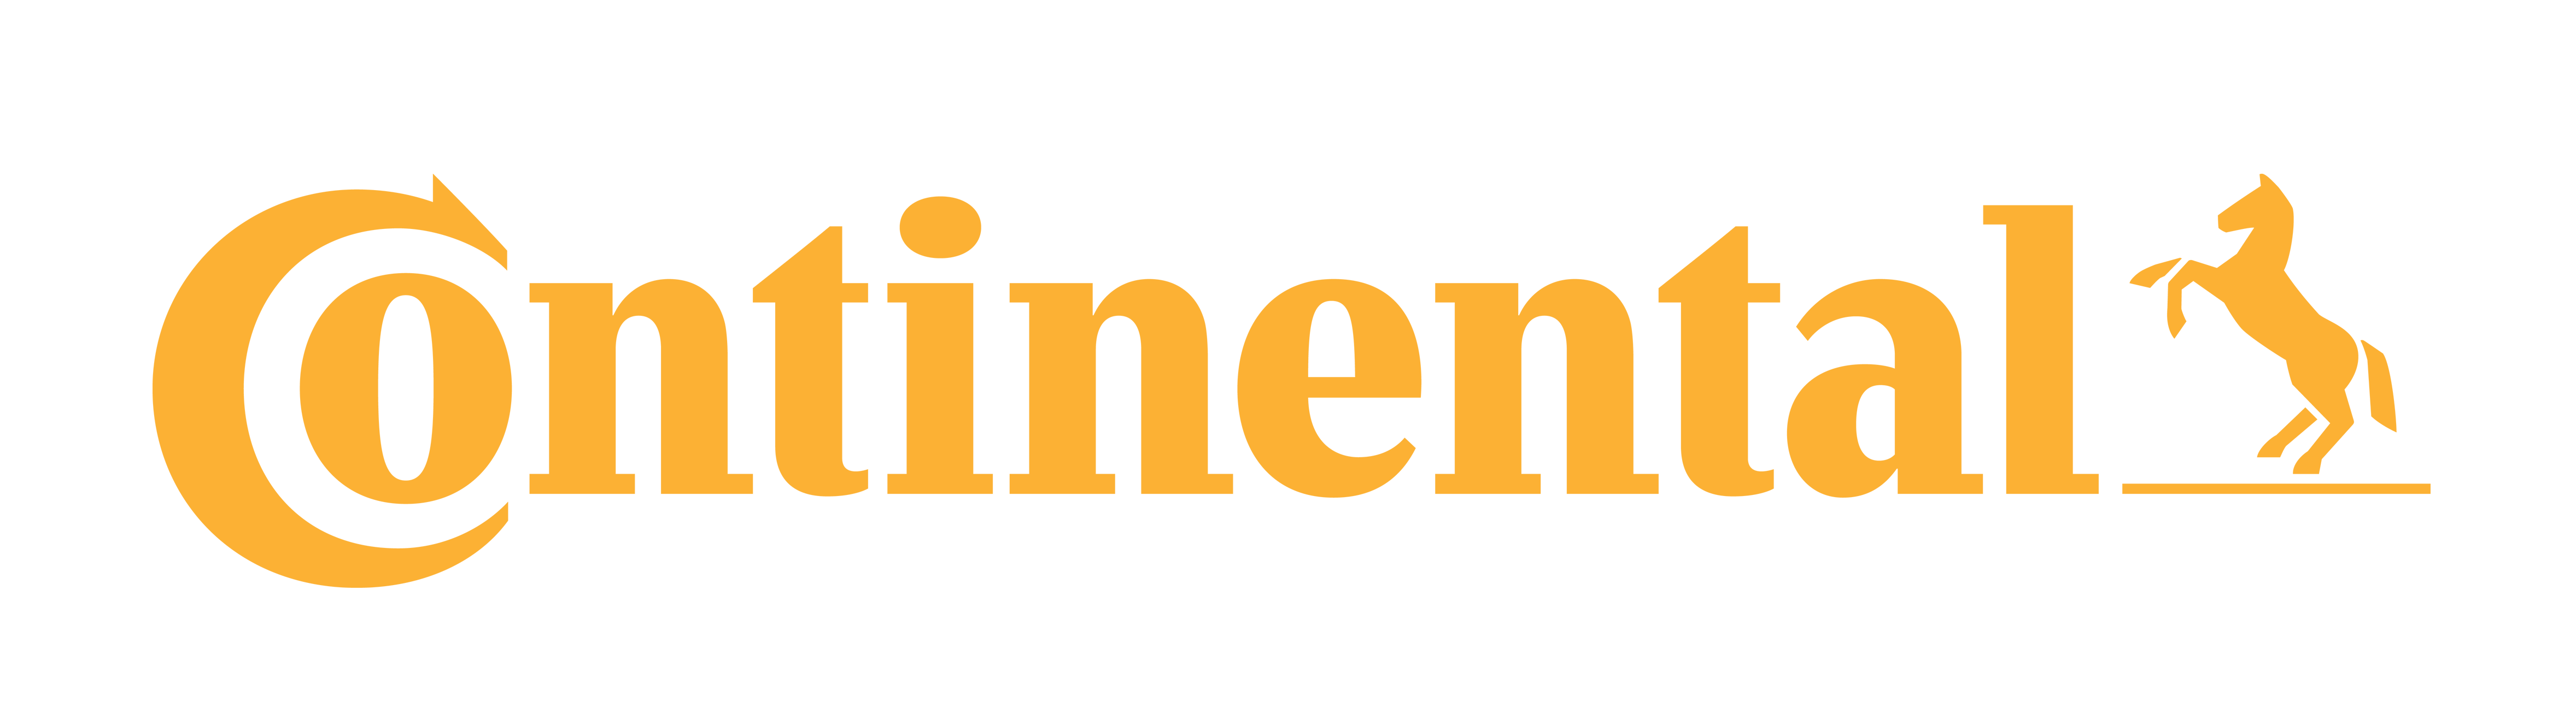 Continental Tire Logo Transpa